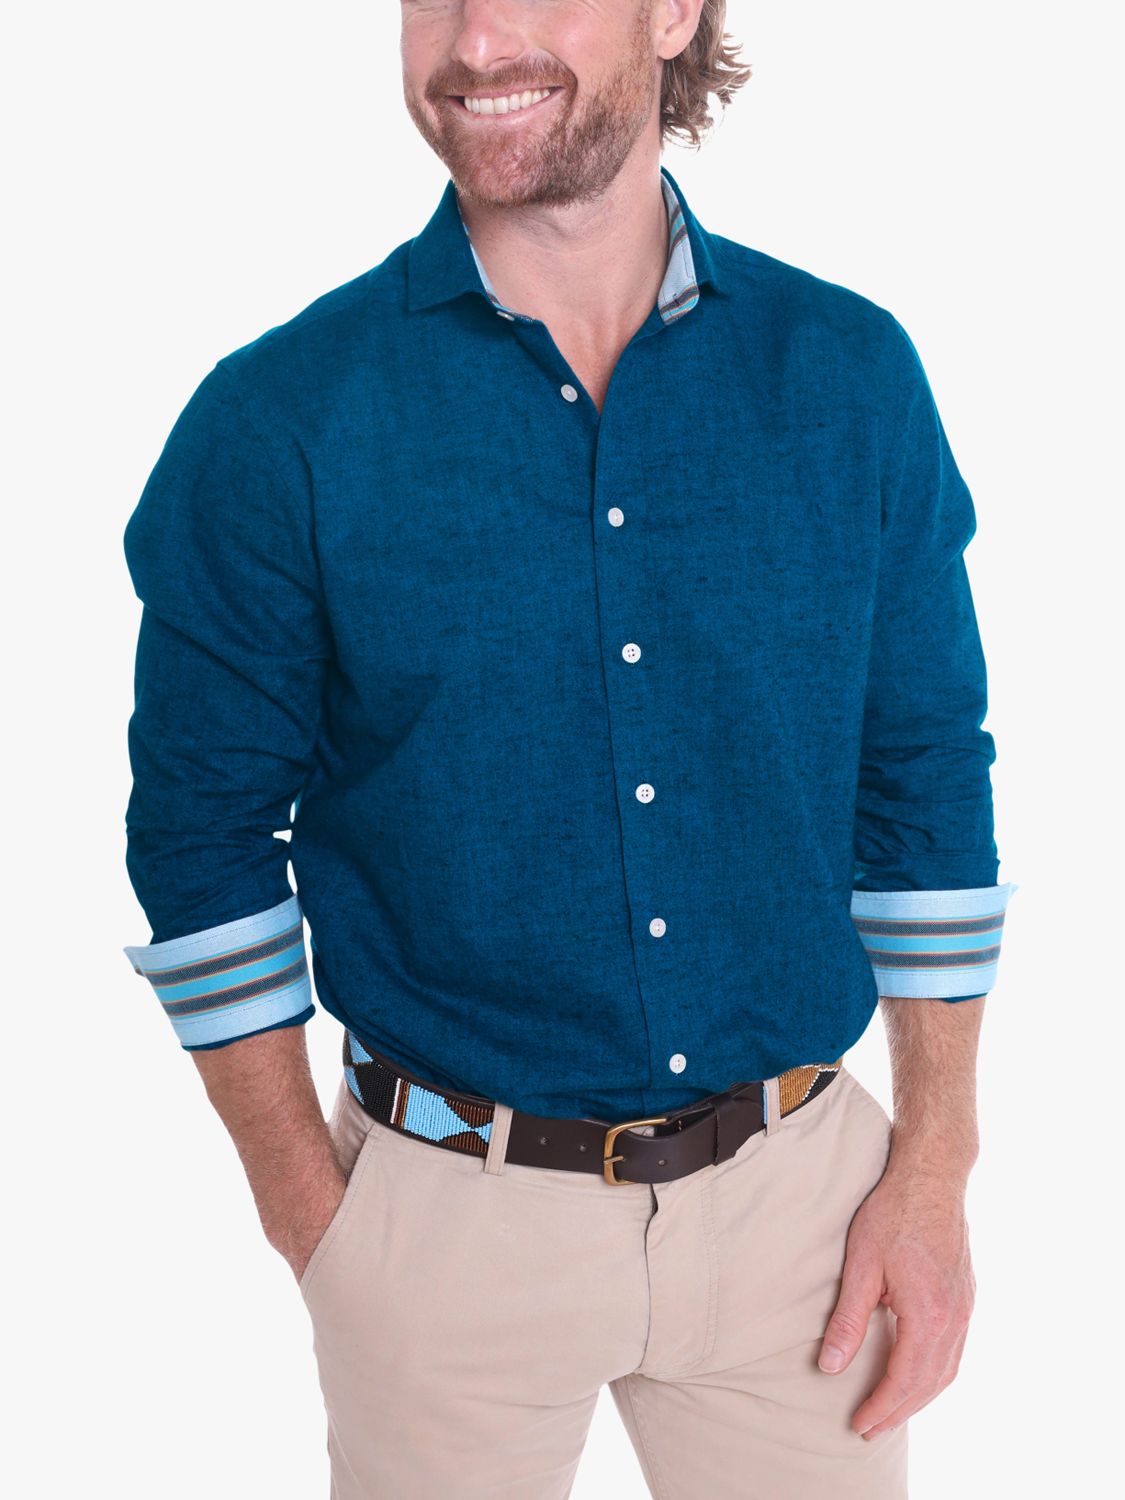 KOY Cheza Cotton Linen Shirt, Navy, S